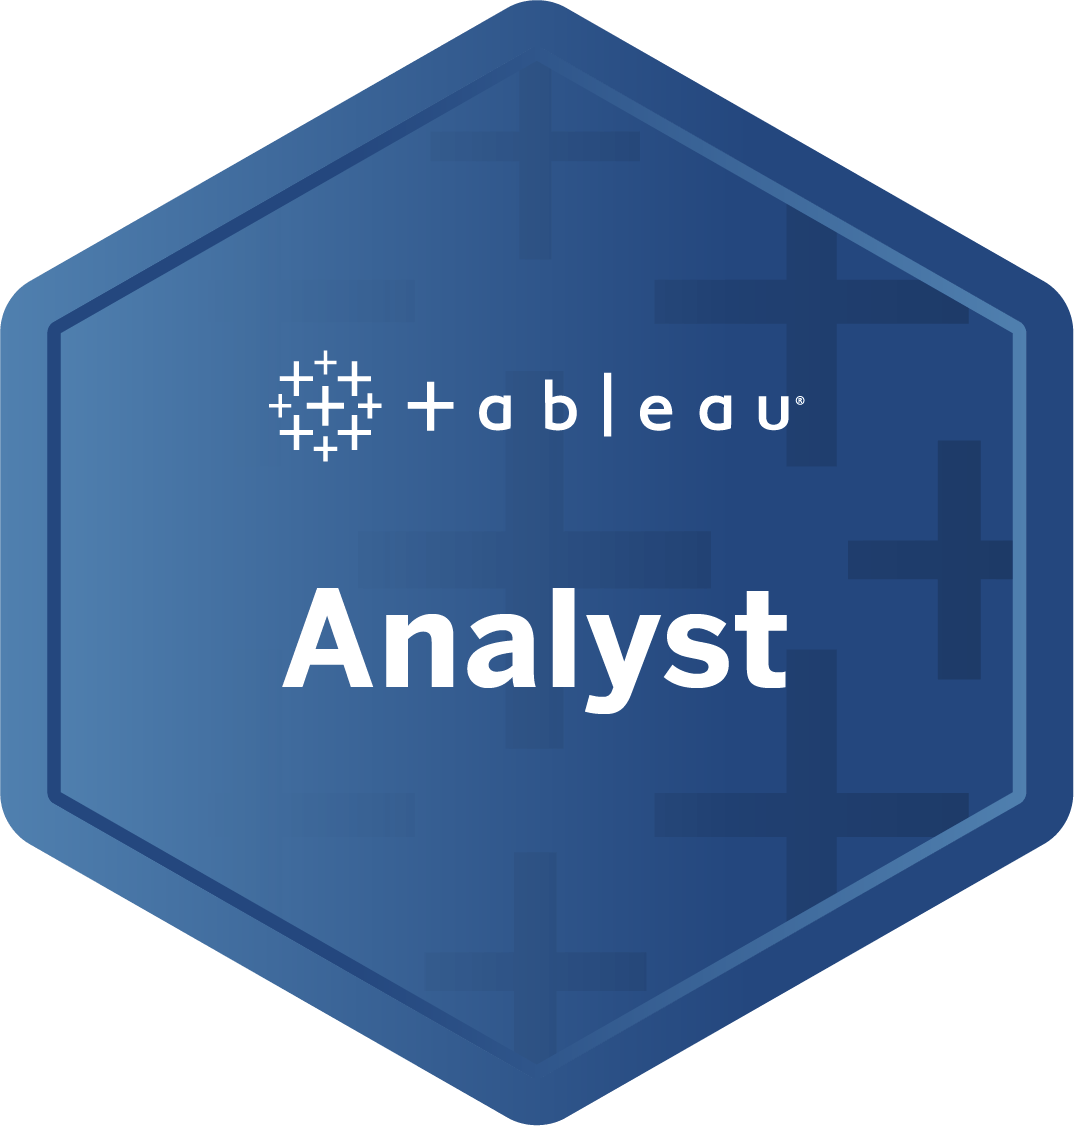  Tableau Certified Data Analyst